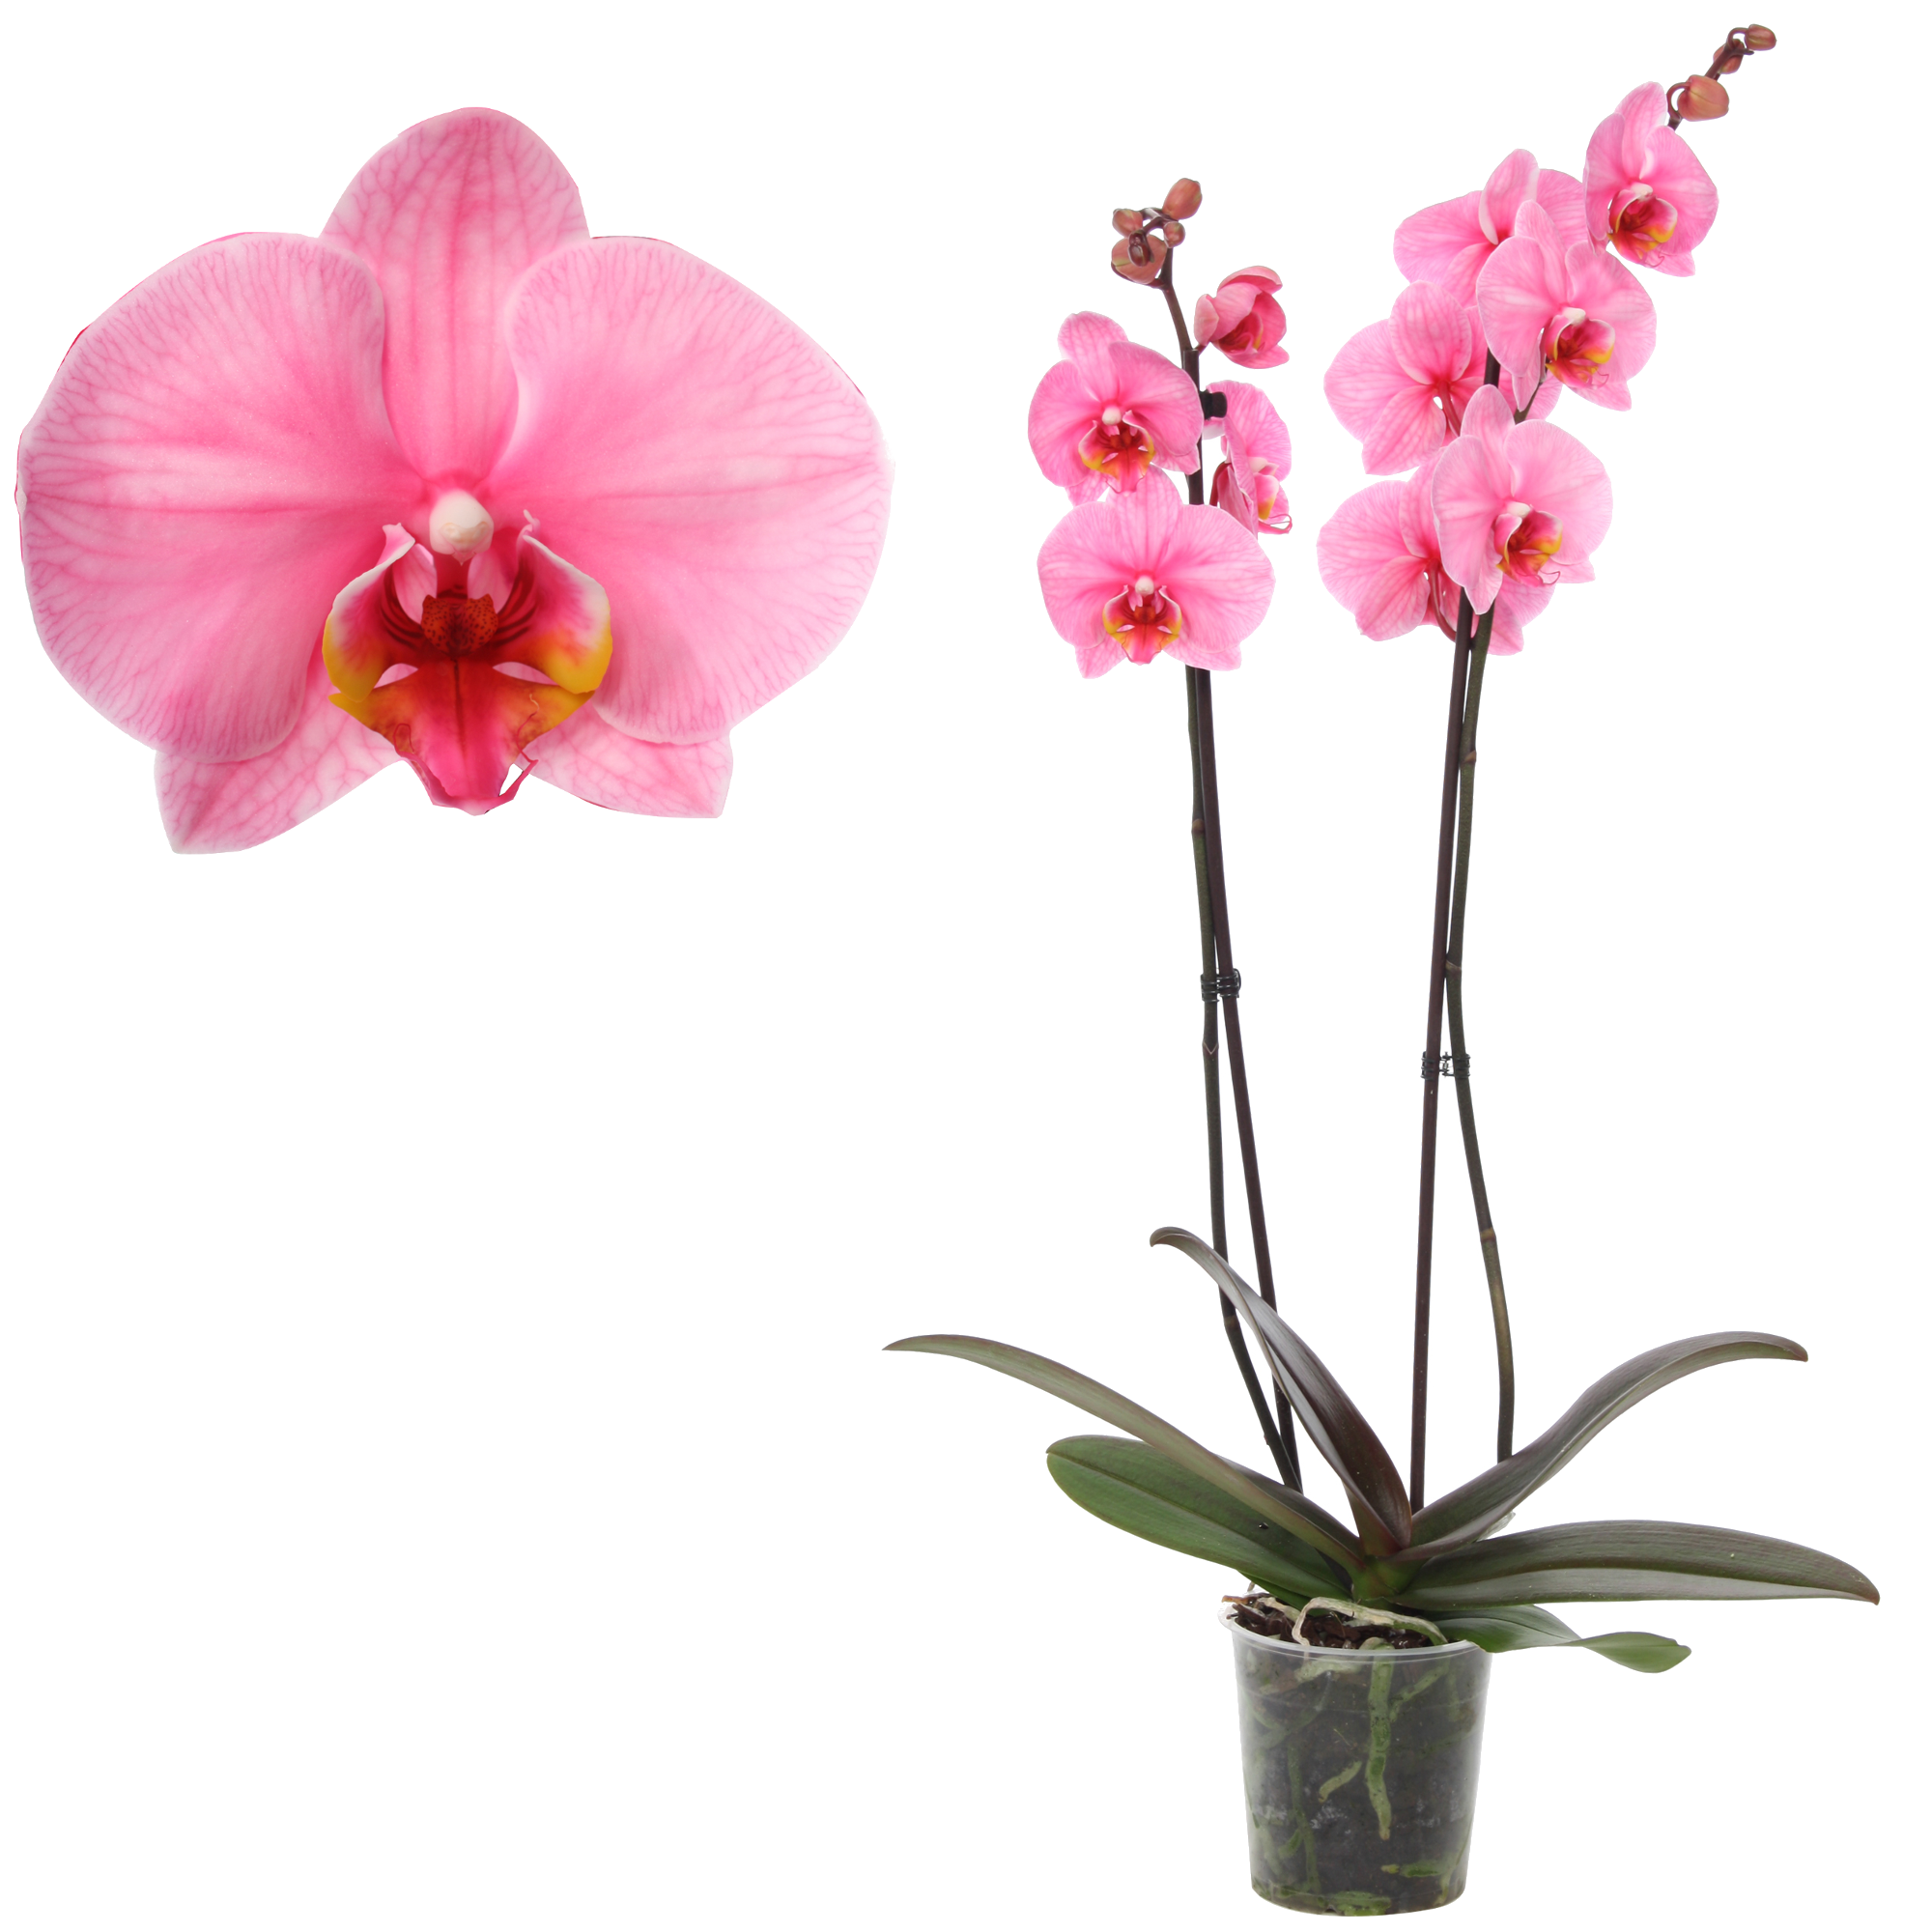 Schmetterlingsorchidee 'Royal Pink' 2 Rispen pink 12 cm Topf + product picture